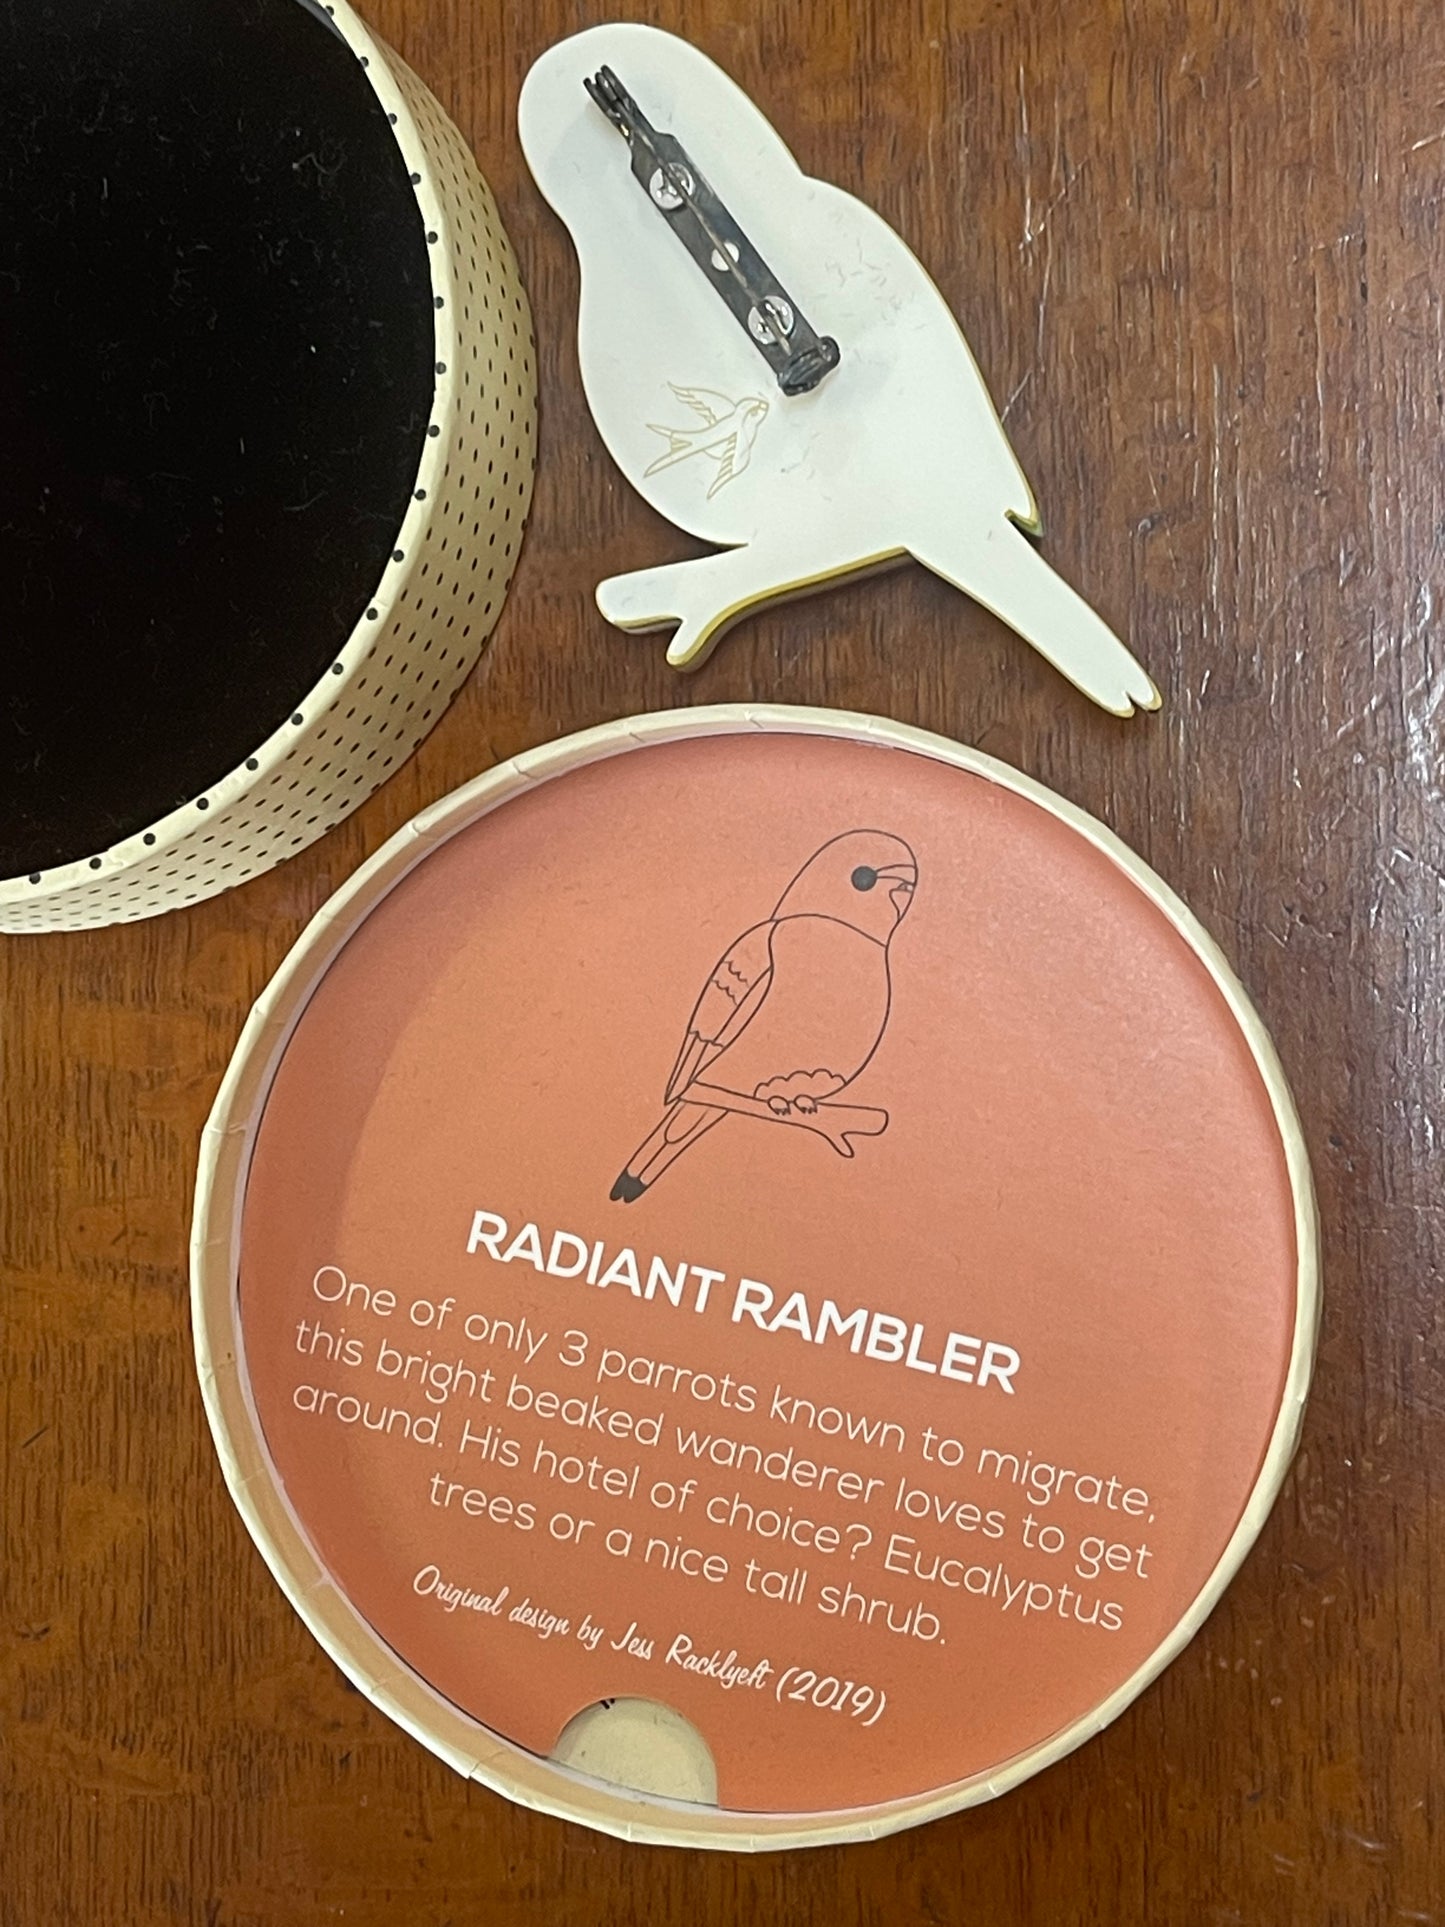 Radiant Rambler Parrot Brooch by Erstwilder and Jess Racklyeft (2019)